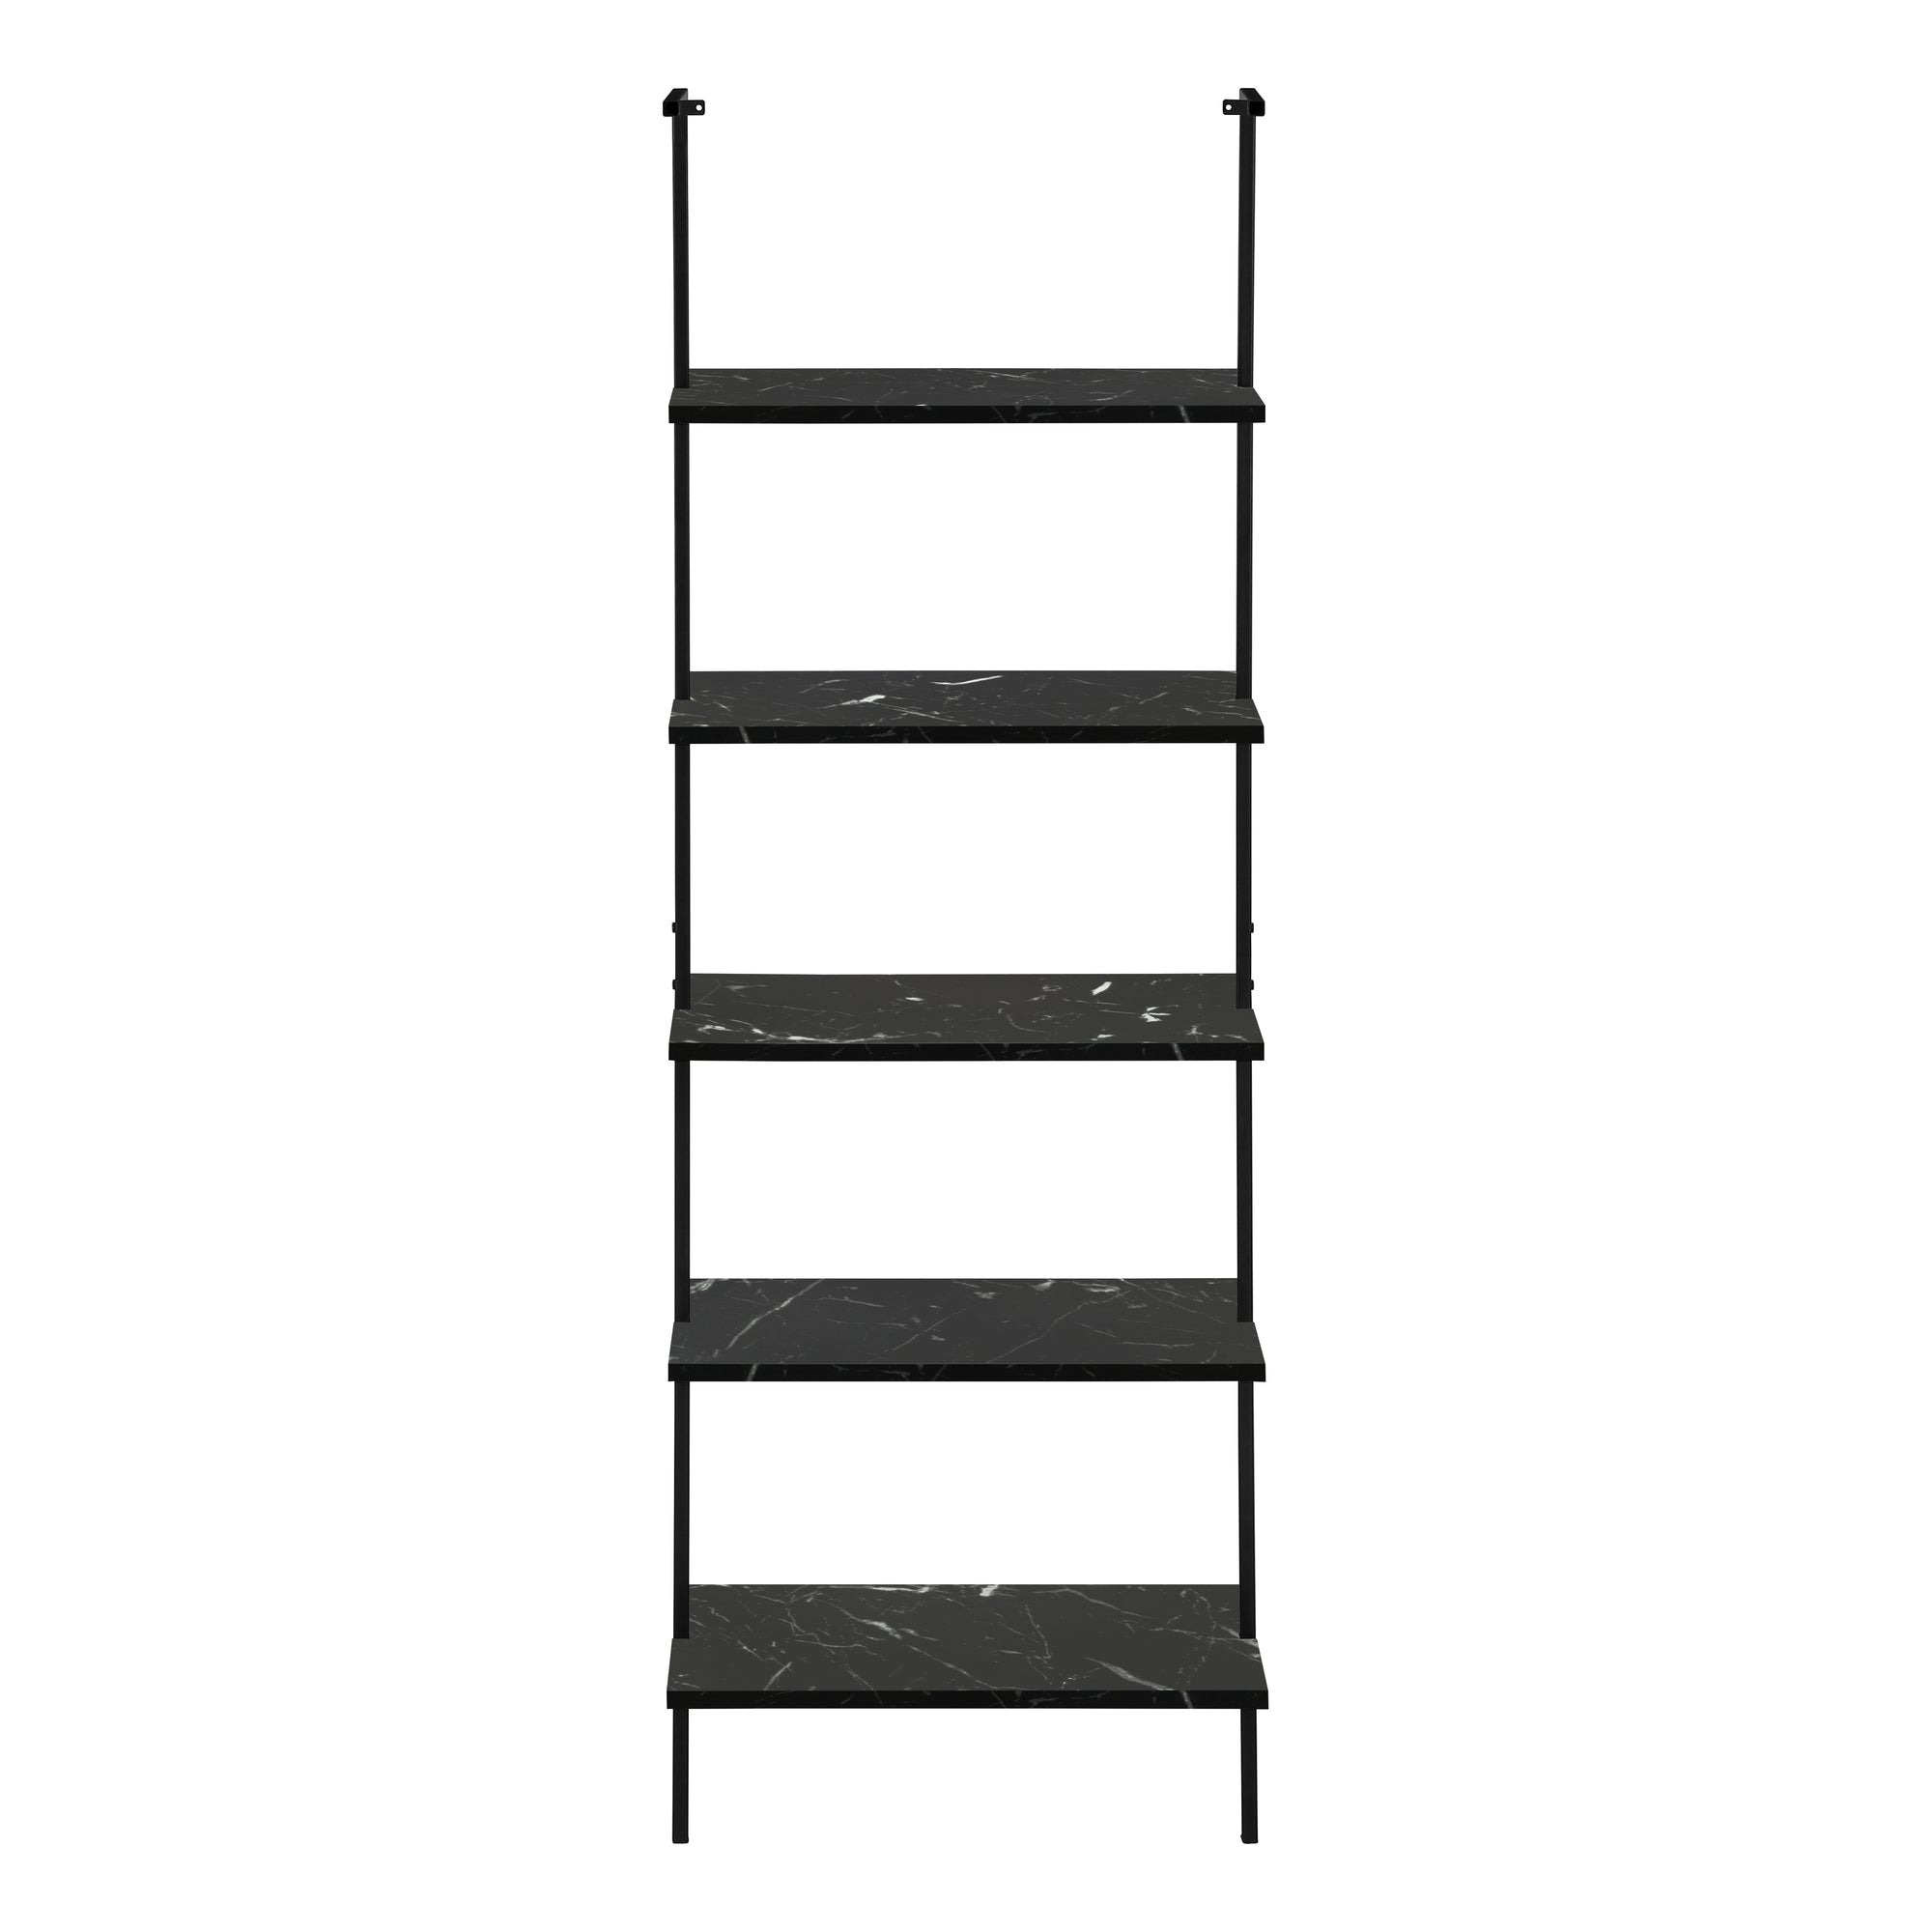 MN-283684    Bookcase - 5 Tier Etagere Ladder Bookshelf - Metal Frame - 72"H - Black Marble-Look